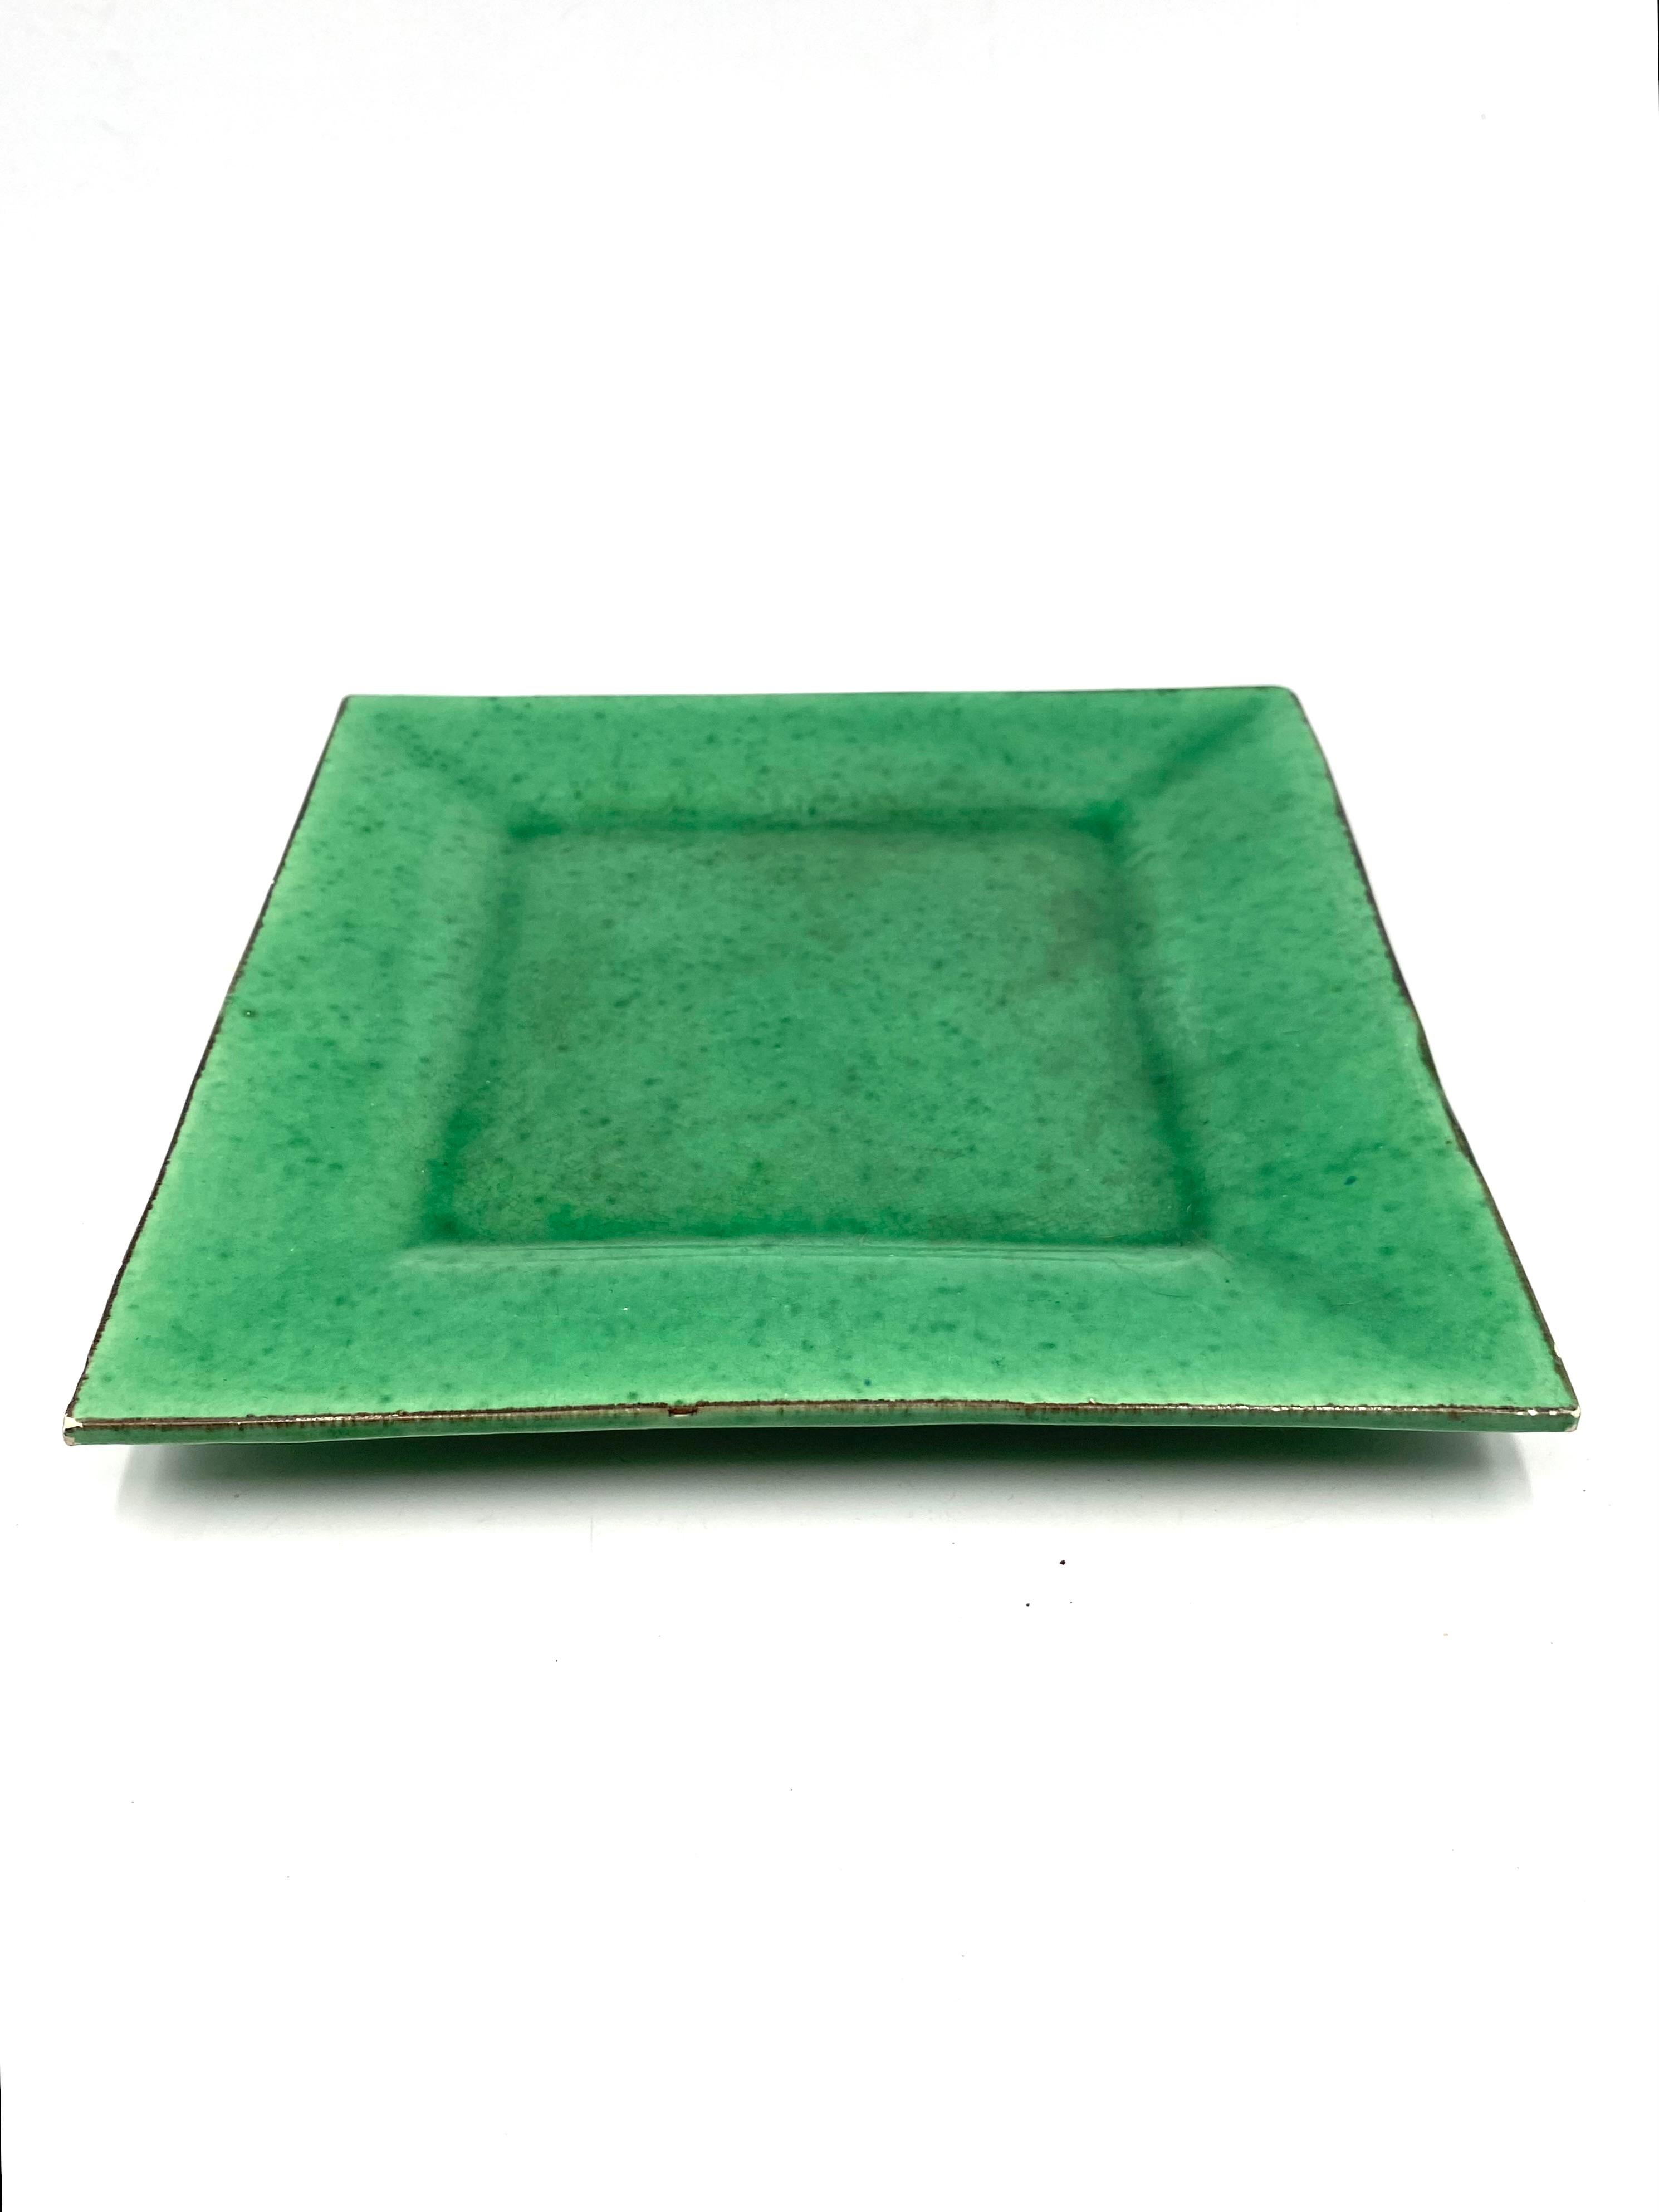 Green Fire-Glazed ceramic vide poche, France, ca. 1960 For Sale 8